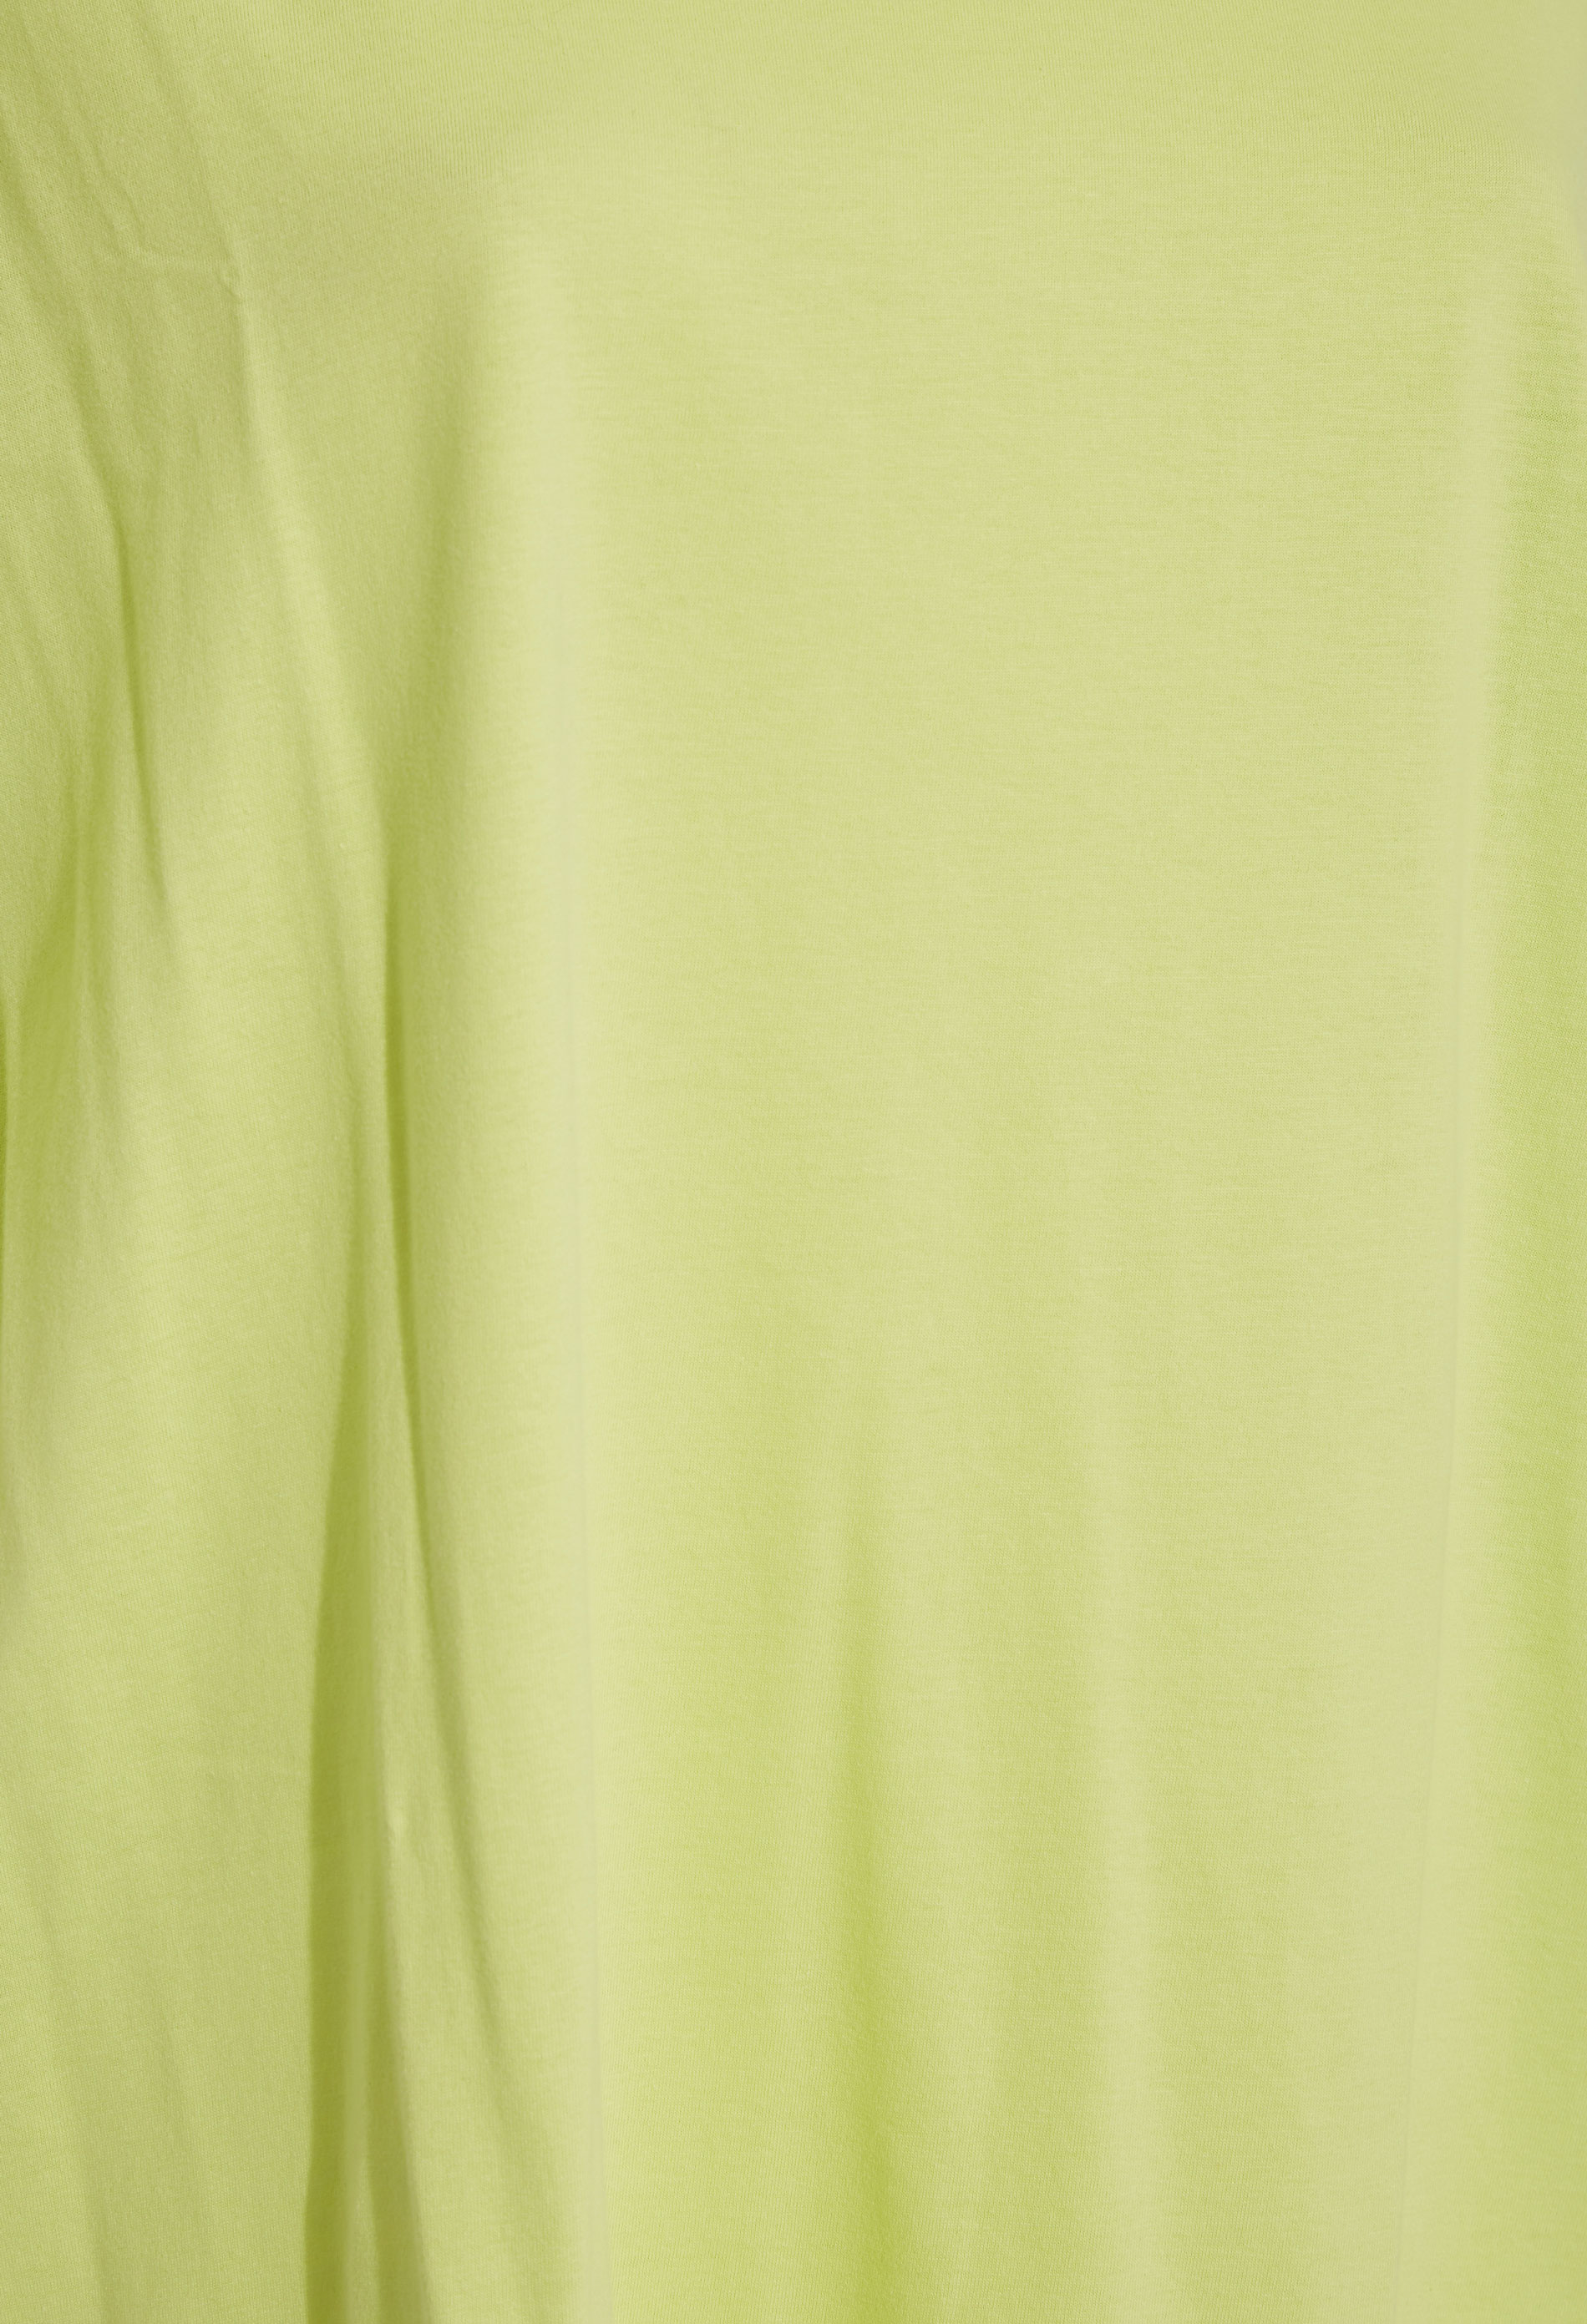 Grande taille  Tops Grande taille  T-Shirts | T-Shirt Vert Citron en Jersey Design Oversize - HW23545